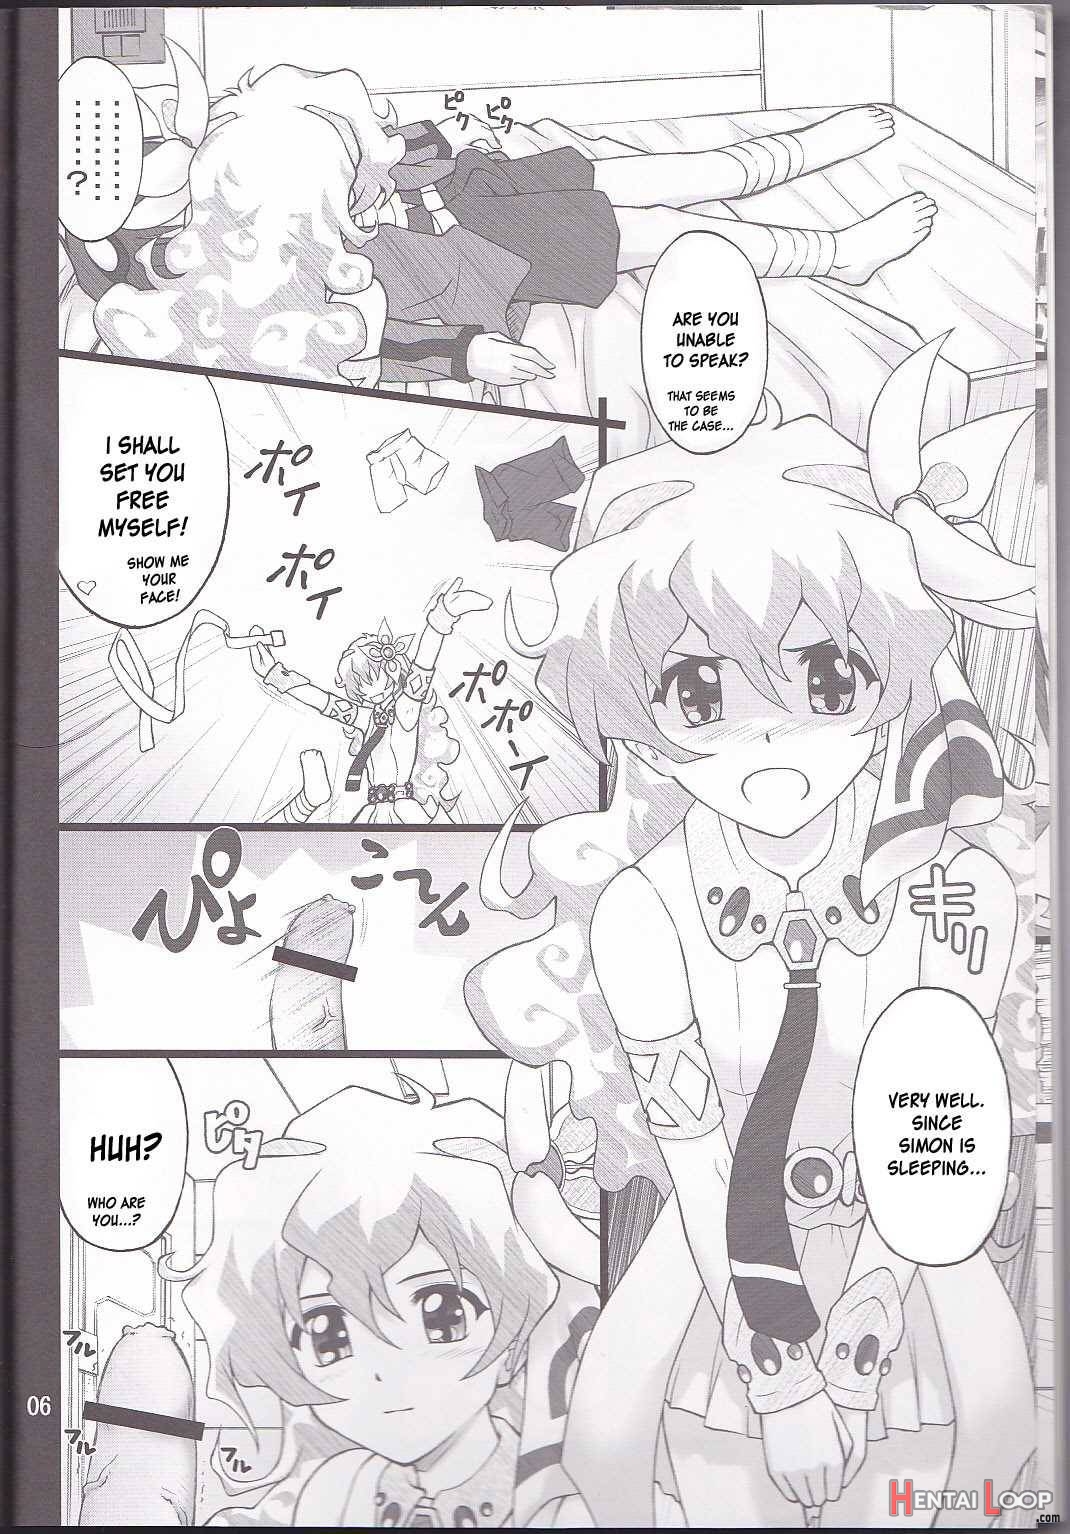 Oikari Nia-chan page 5